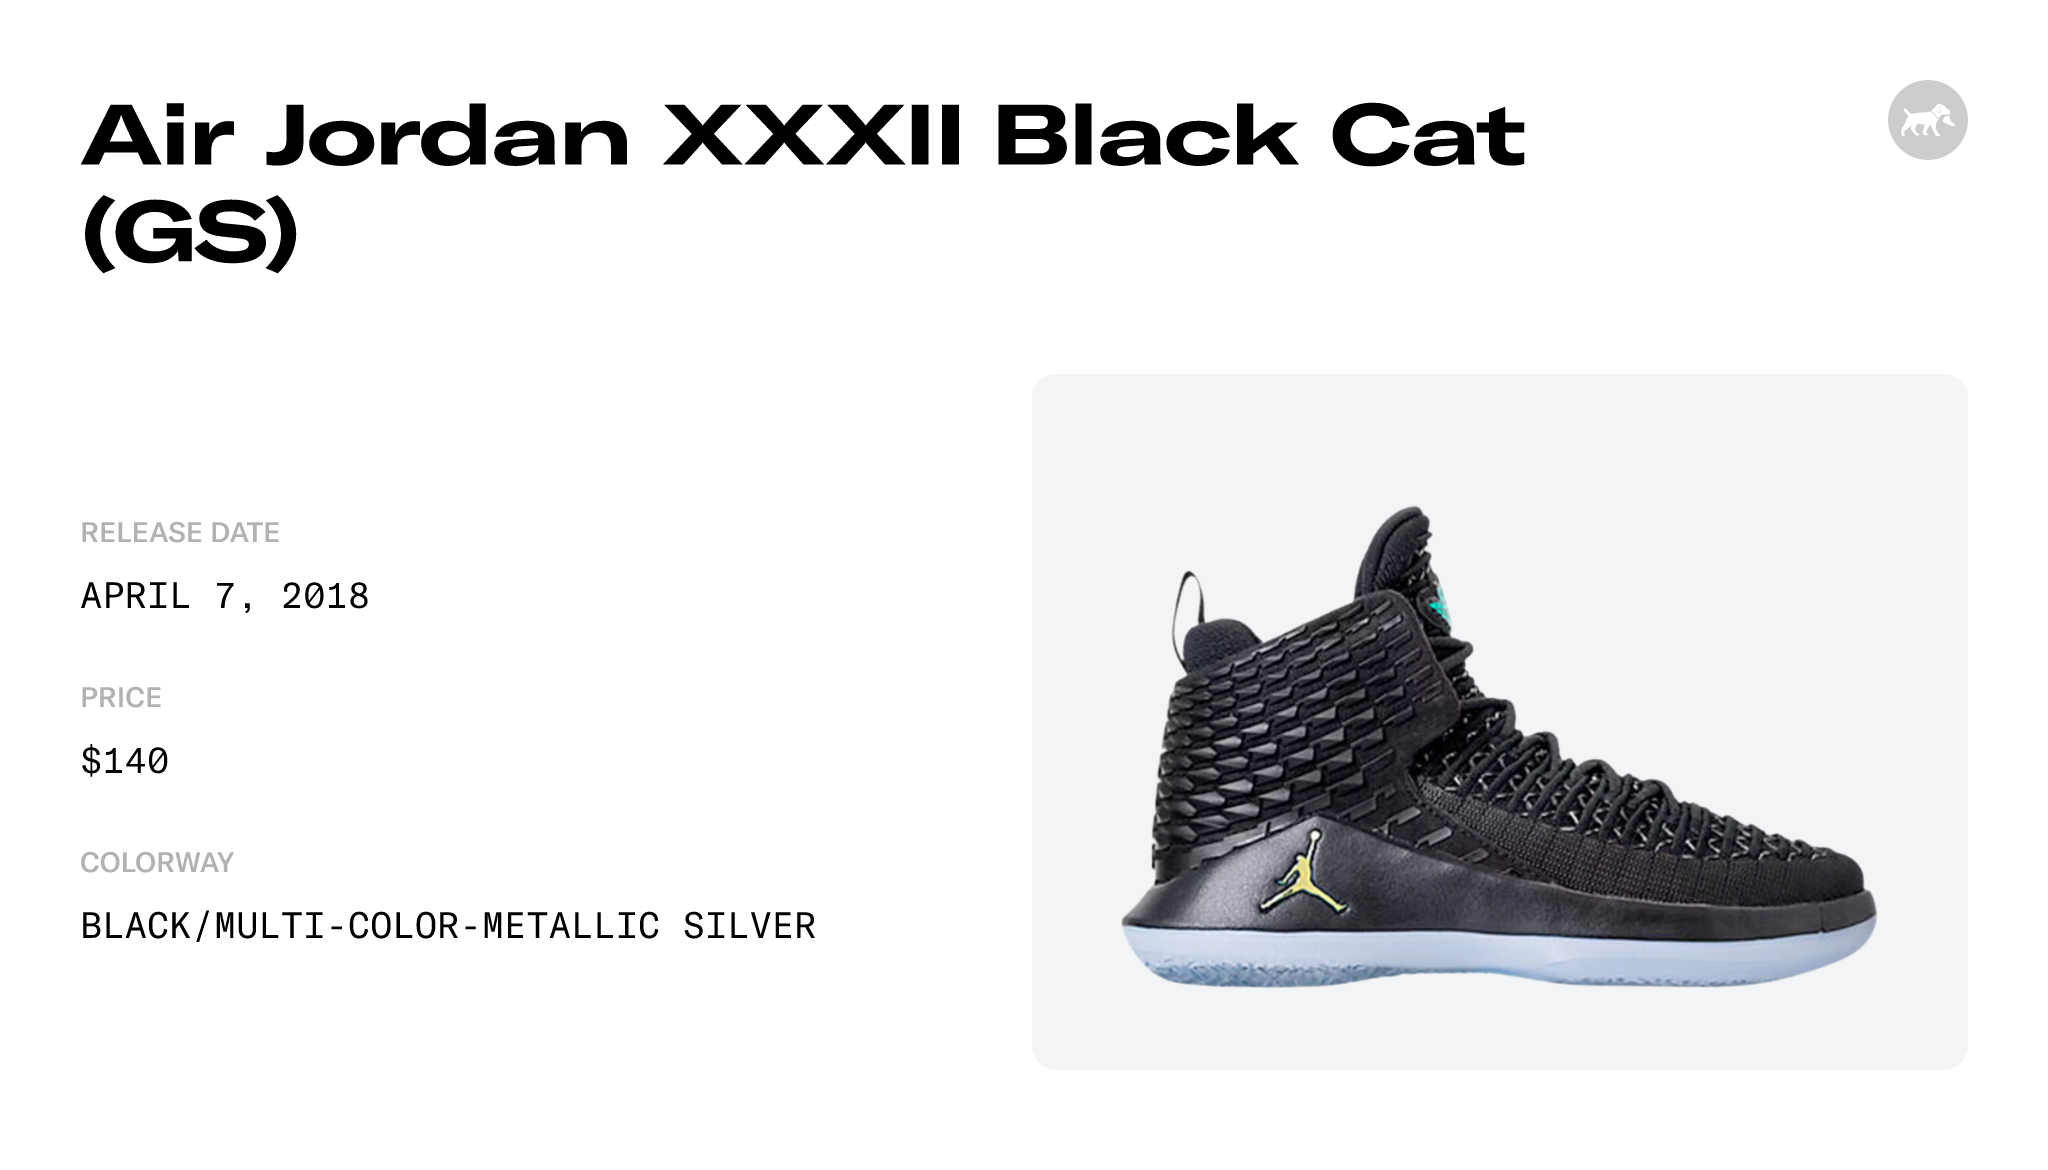 Air Jordan XXXII Black Cat (GS) - AA1254-003 Raffles and Release Date